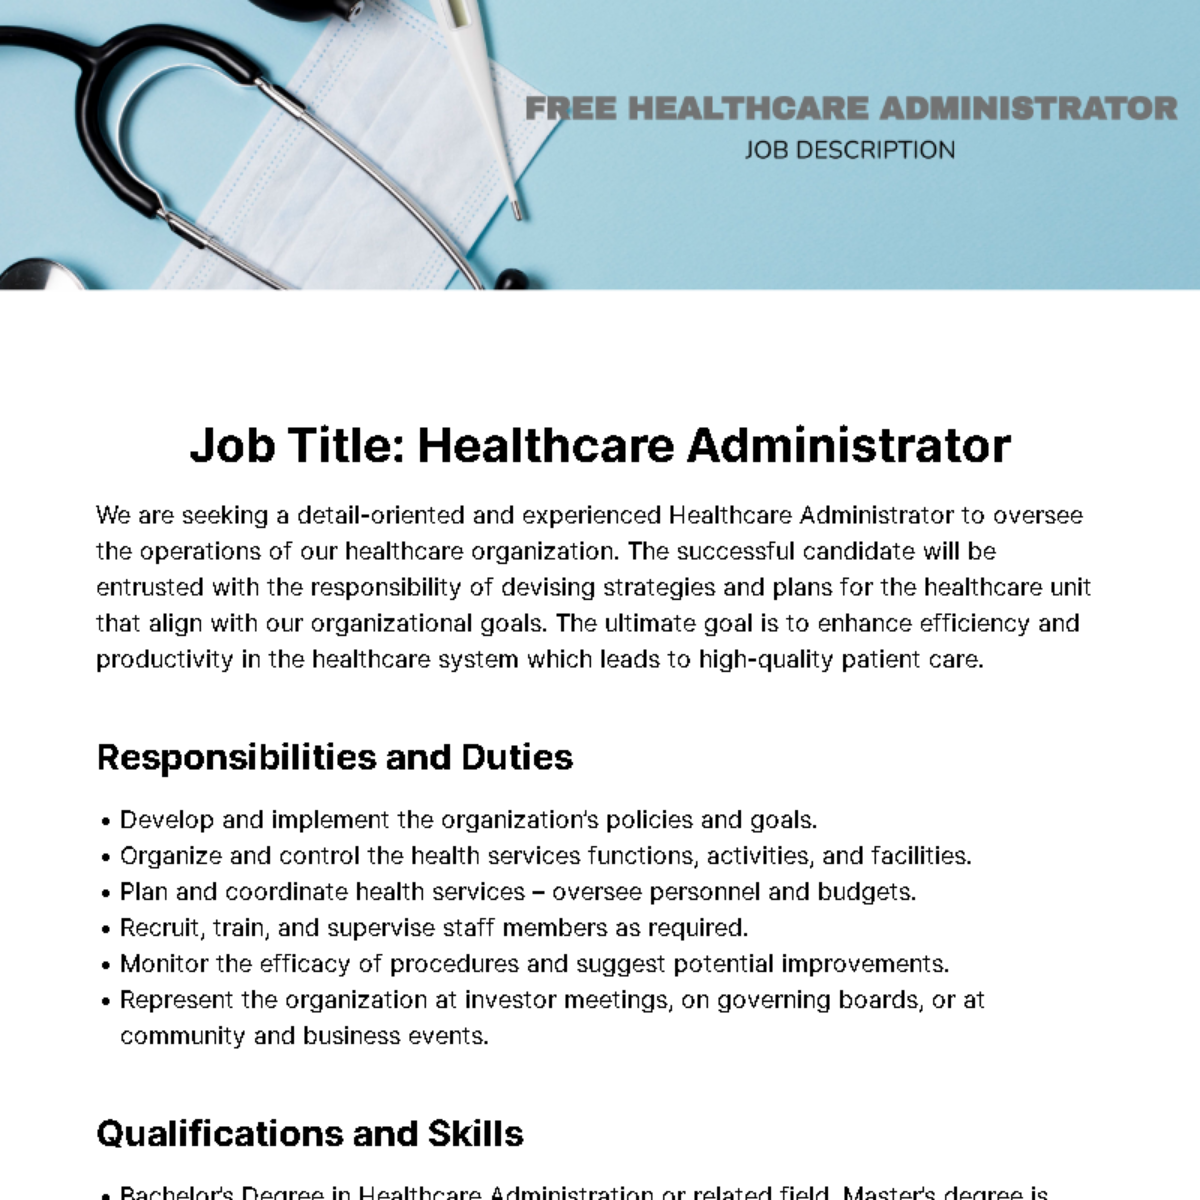 Free Healthcare Administrator Job Description Template